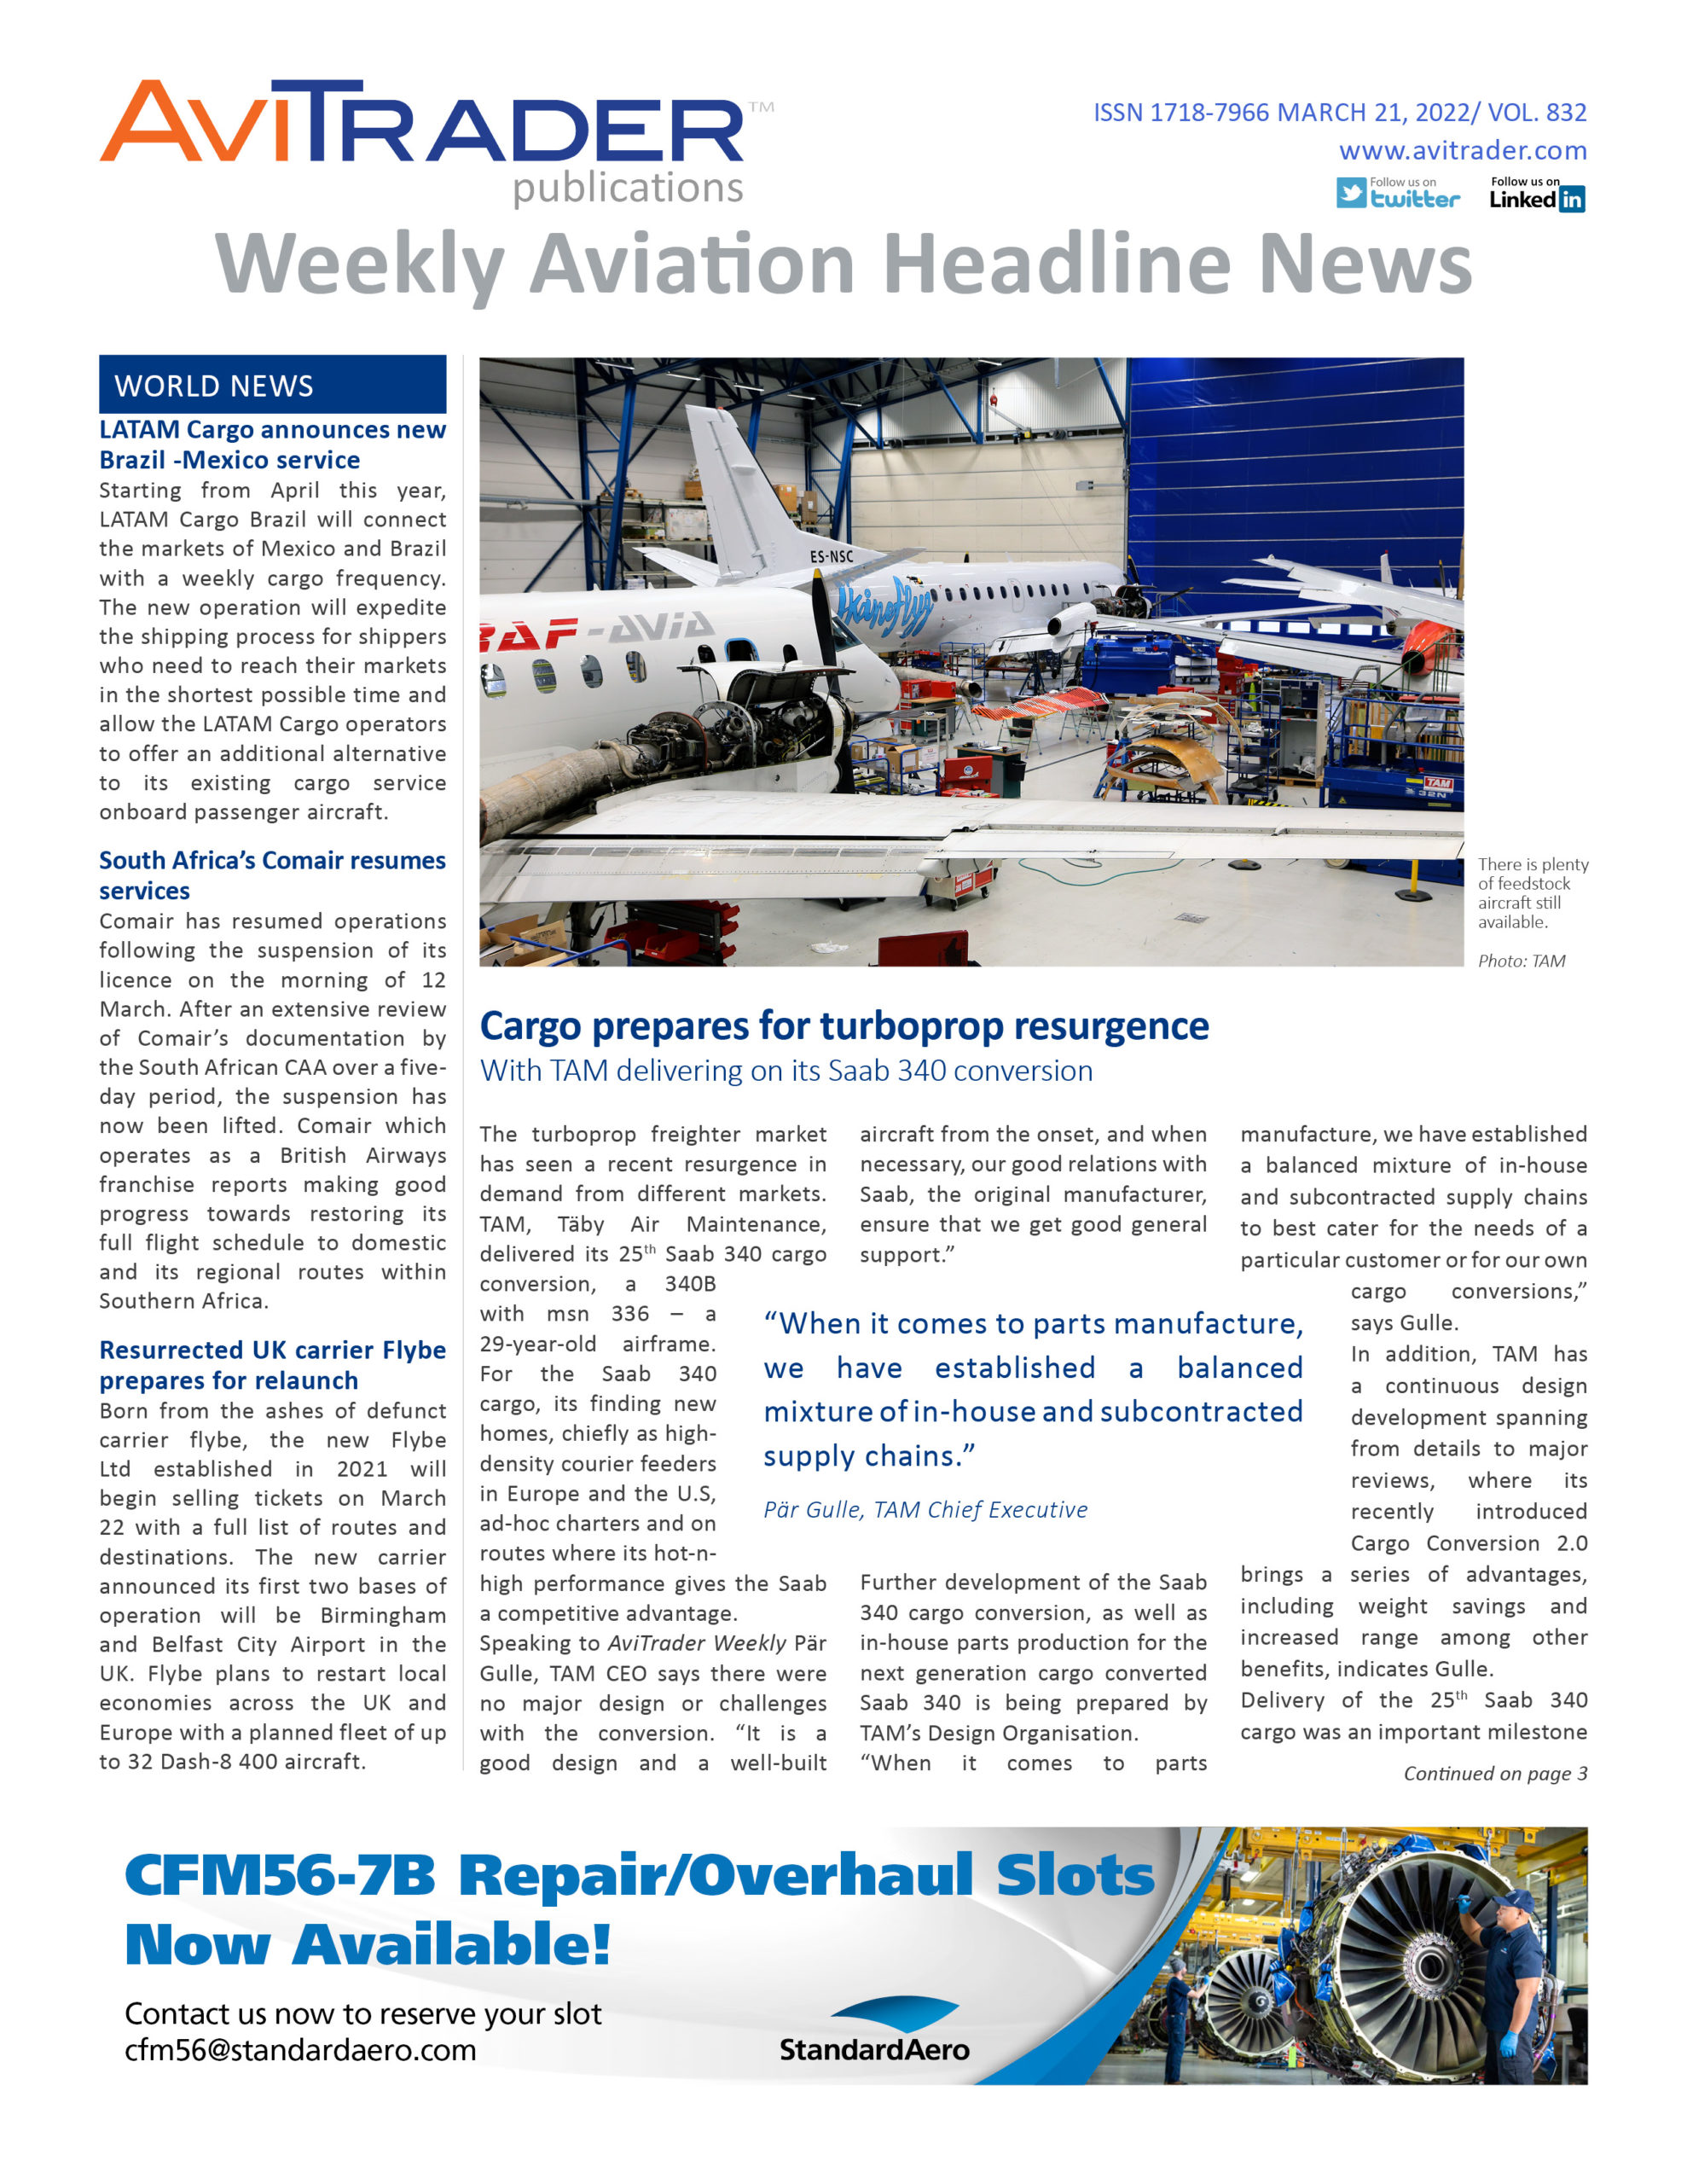 AviTrader_Weekly_Headline_News_Cover_2022-03-21